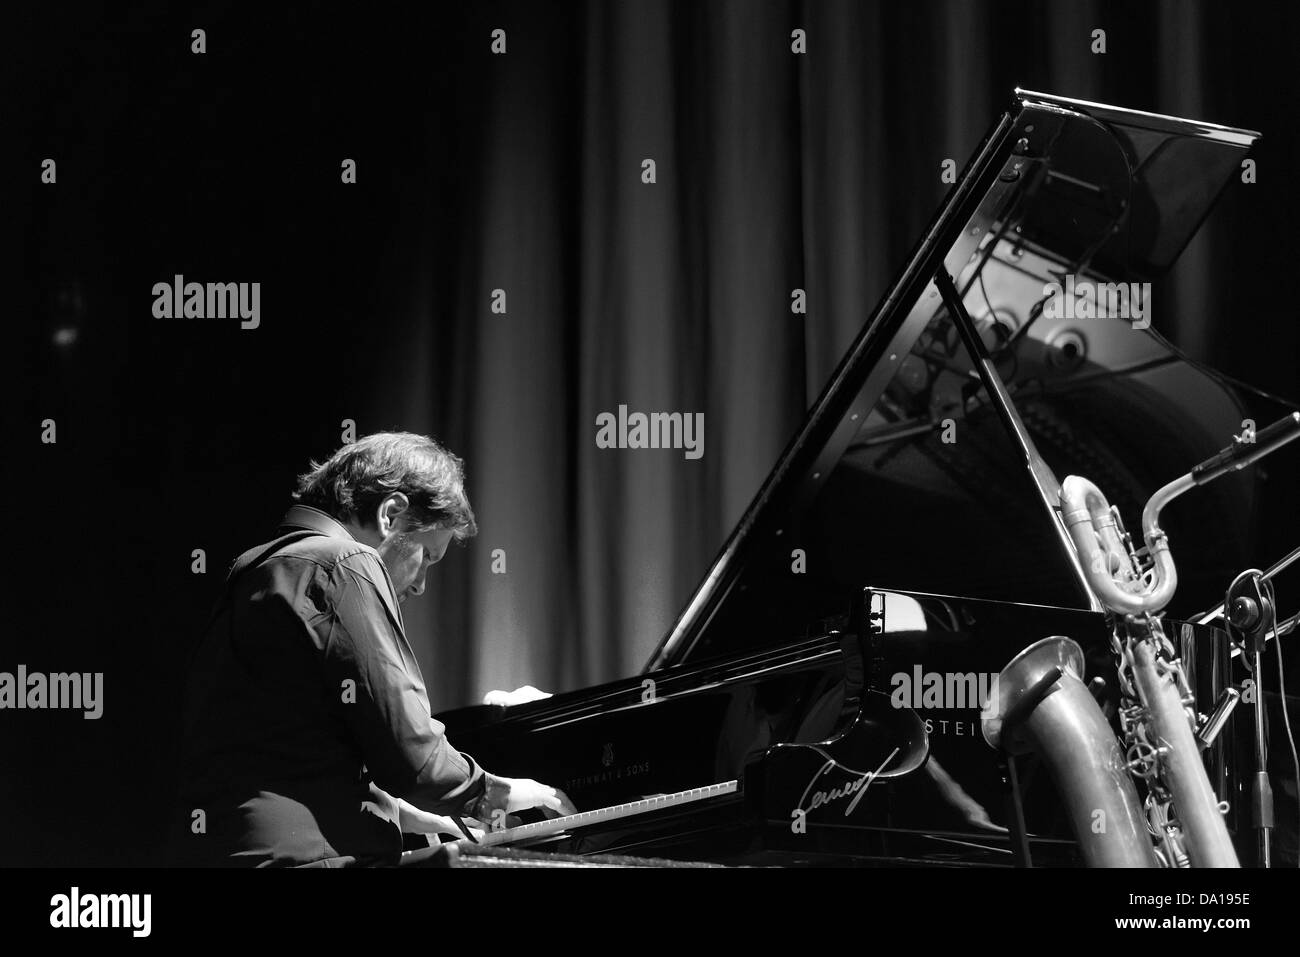 Double Fuor quartet (Deidda, Zaninotto, Serafini, Colussi) in Udin&jazz 2013 jazz festival Stock Photo